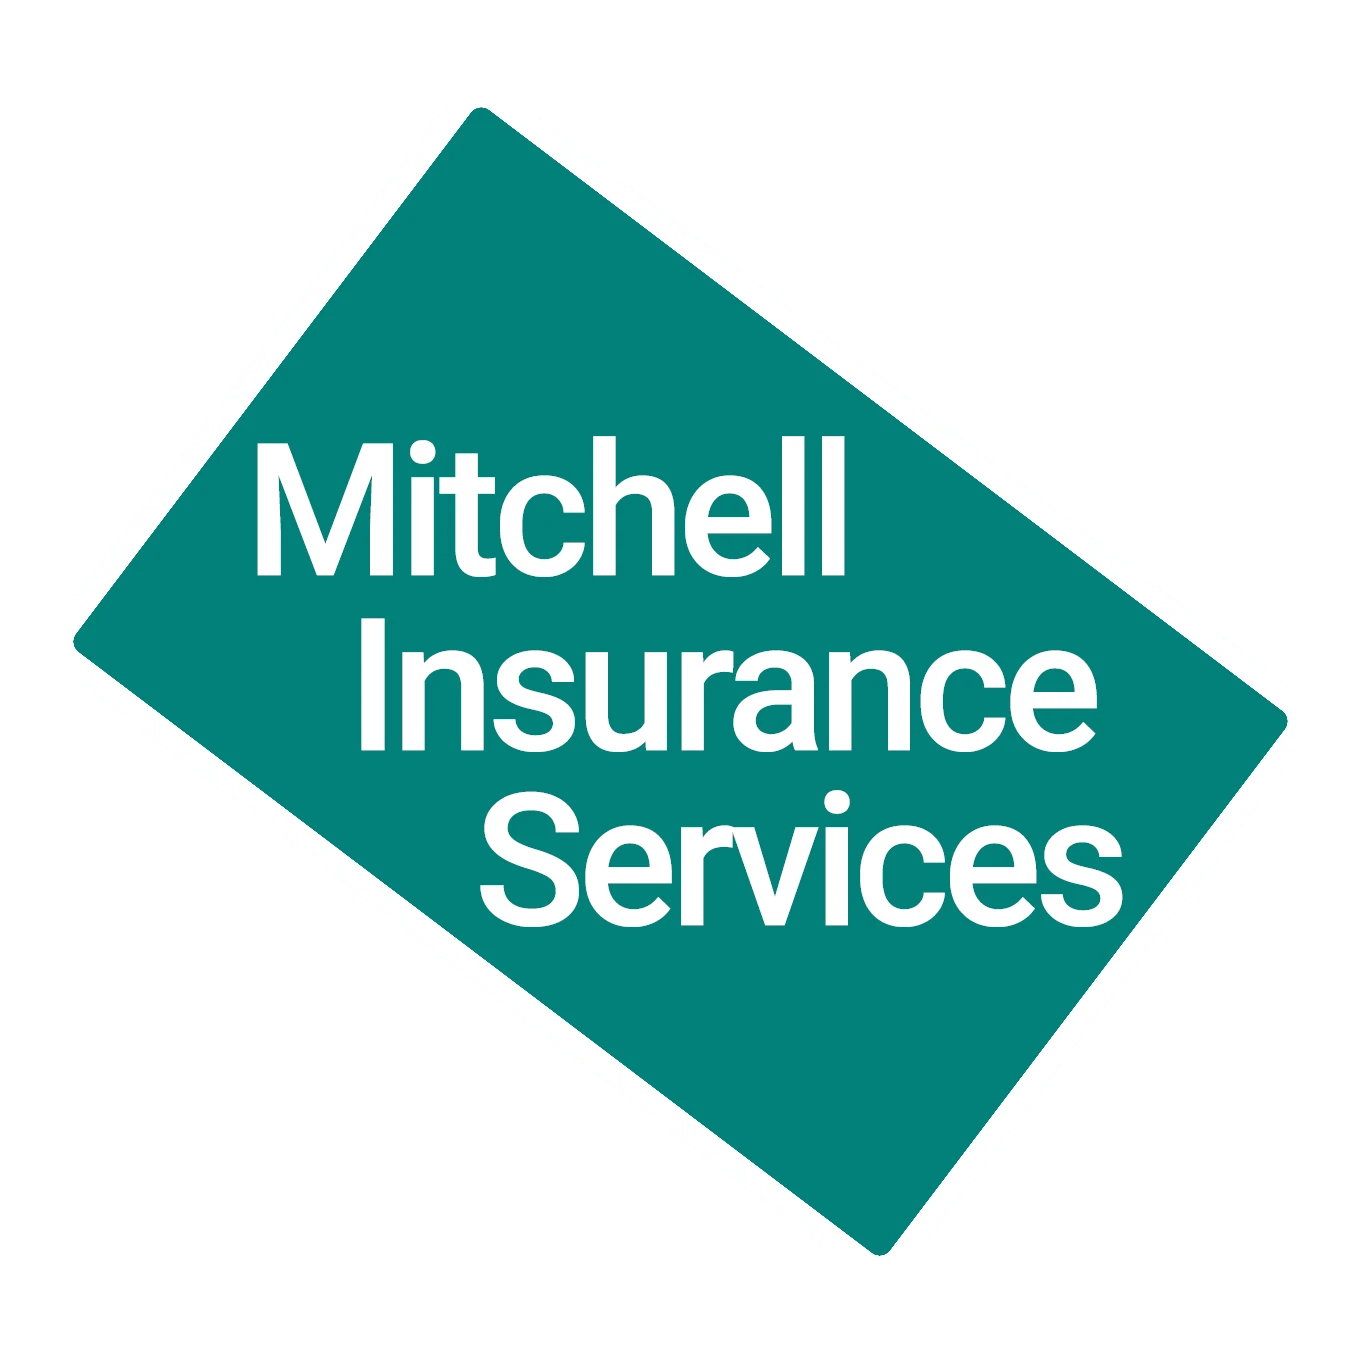 Mitchell Insurance Services - Matthews NC